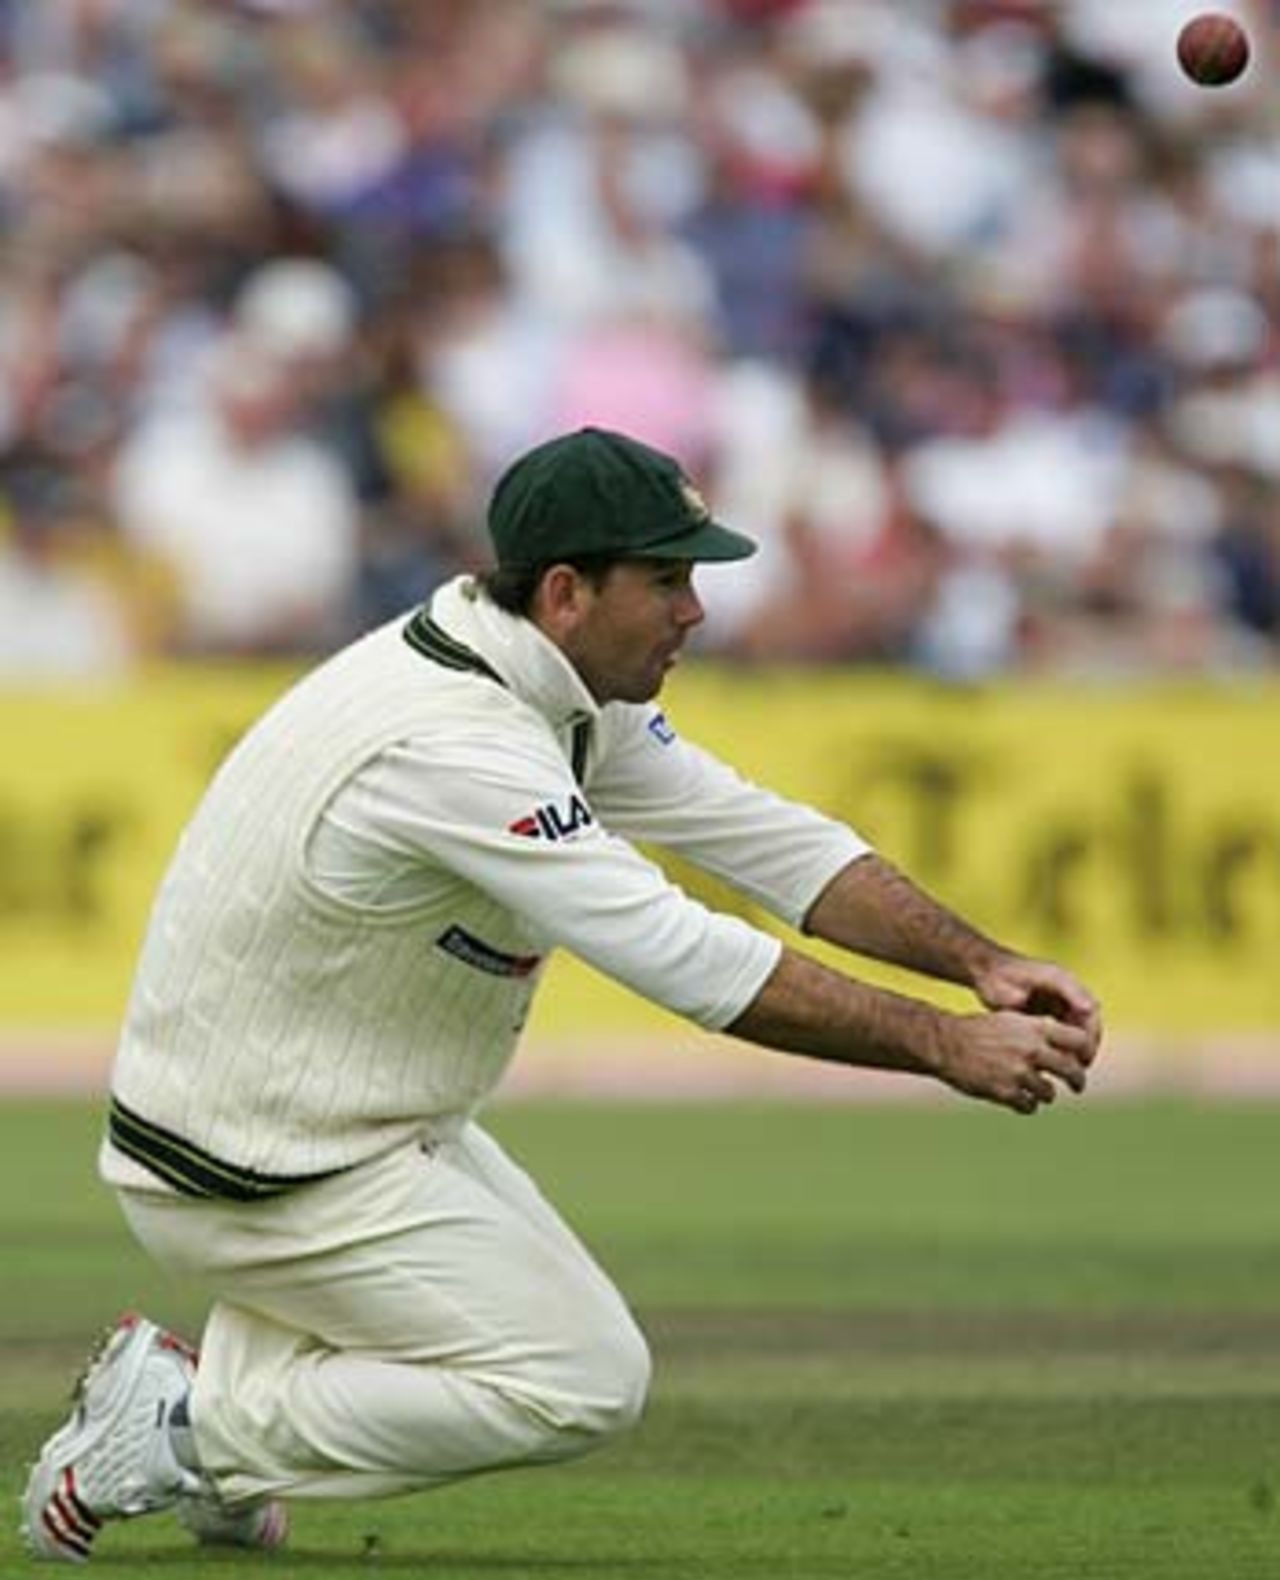 Ricky Ponting misfields, England v Australia, 3rd Test, Old Trafford, August 14, 2005